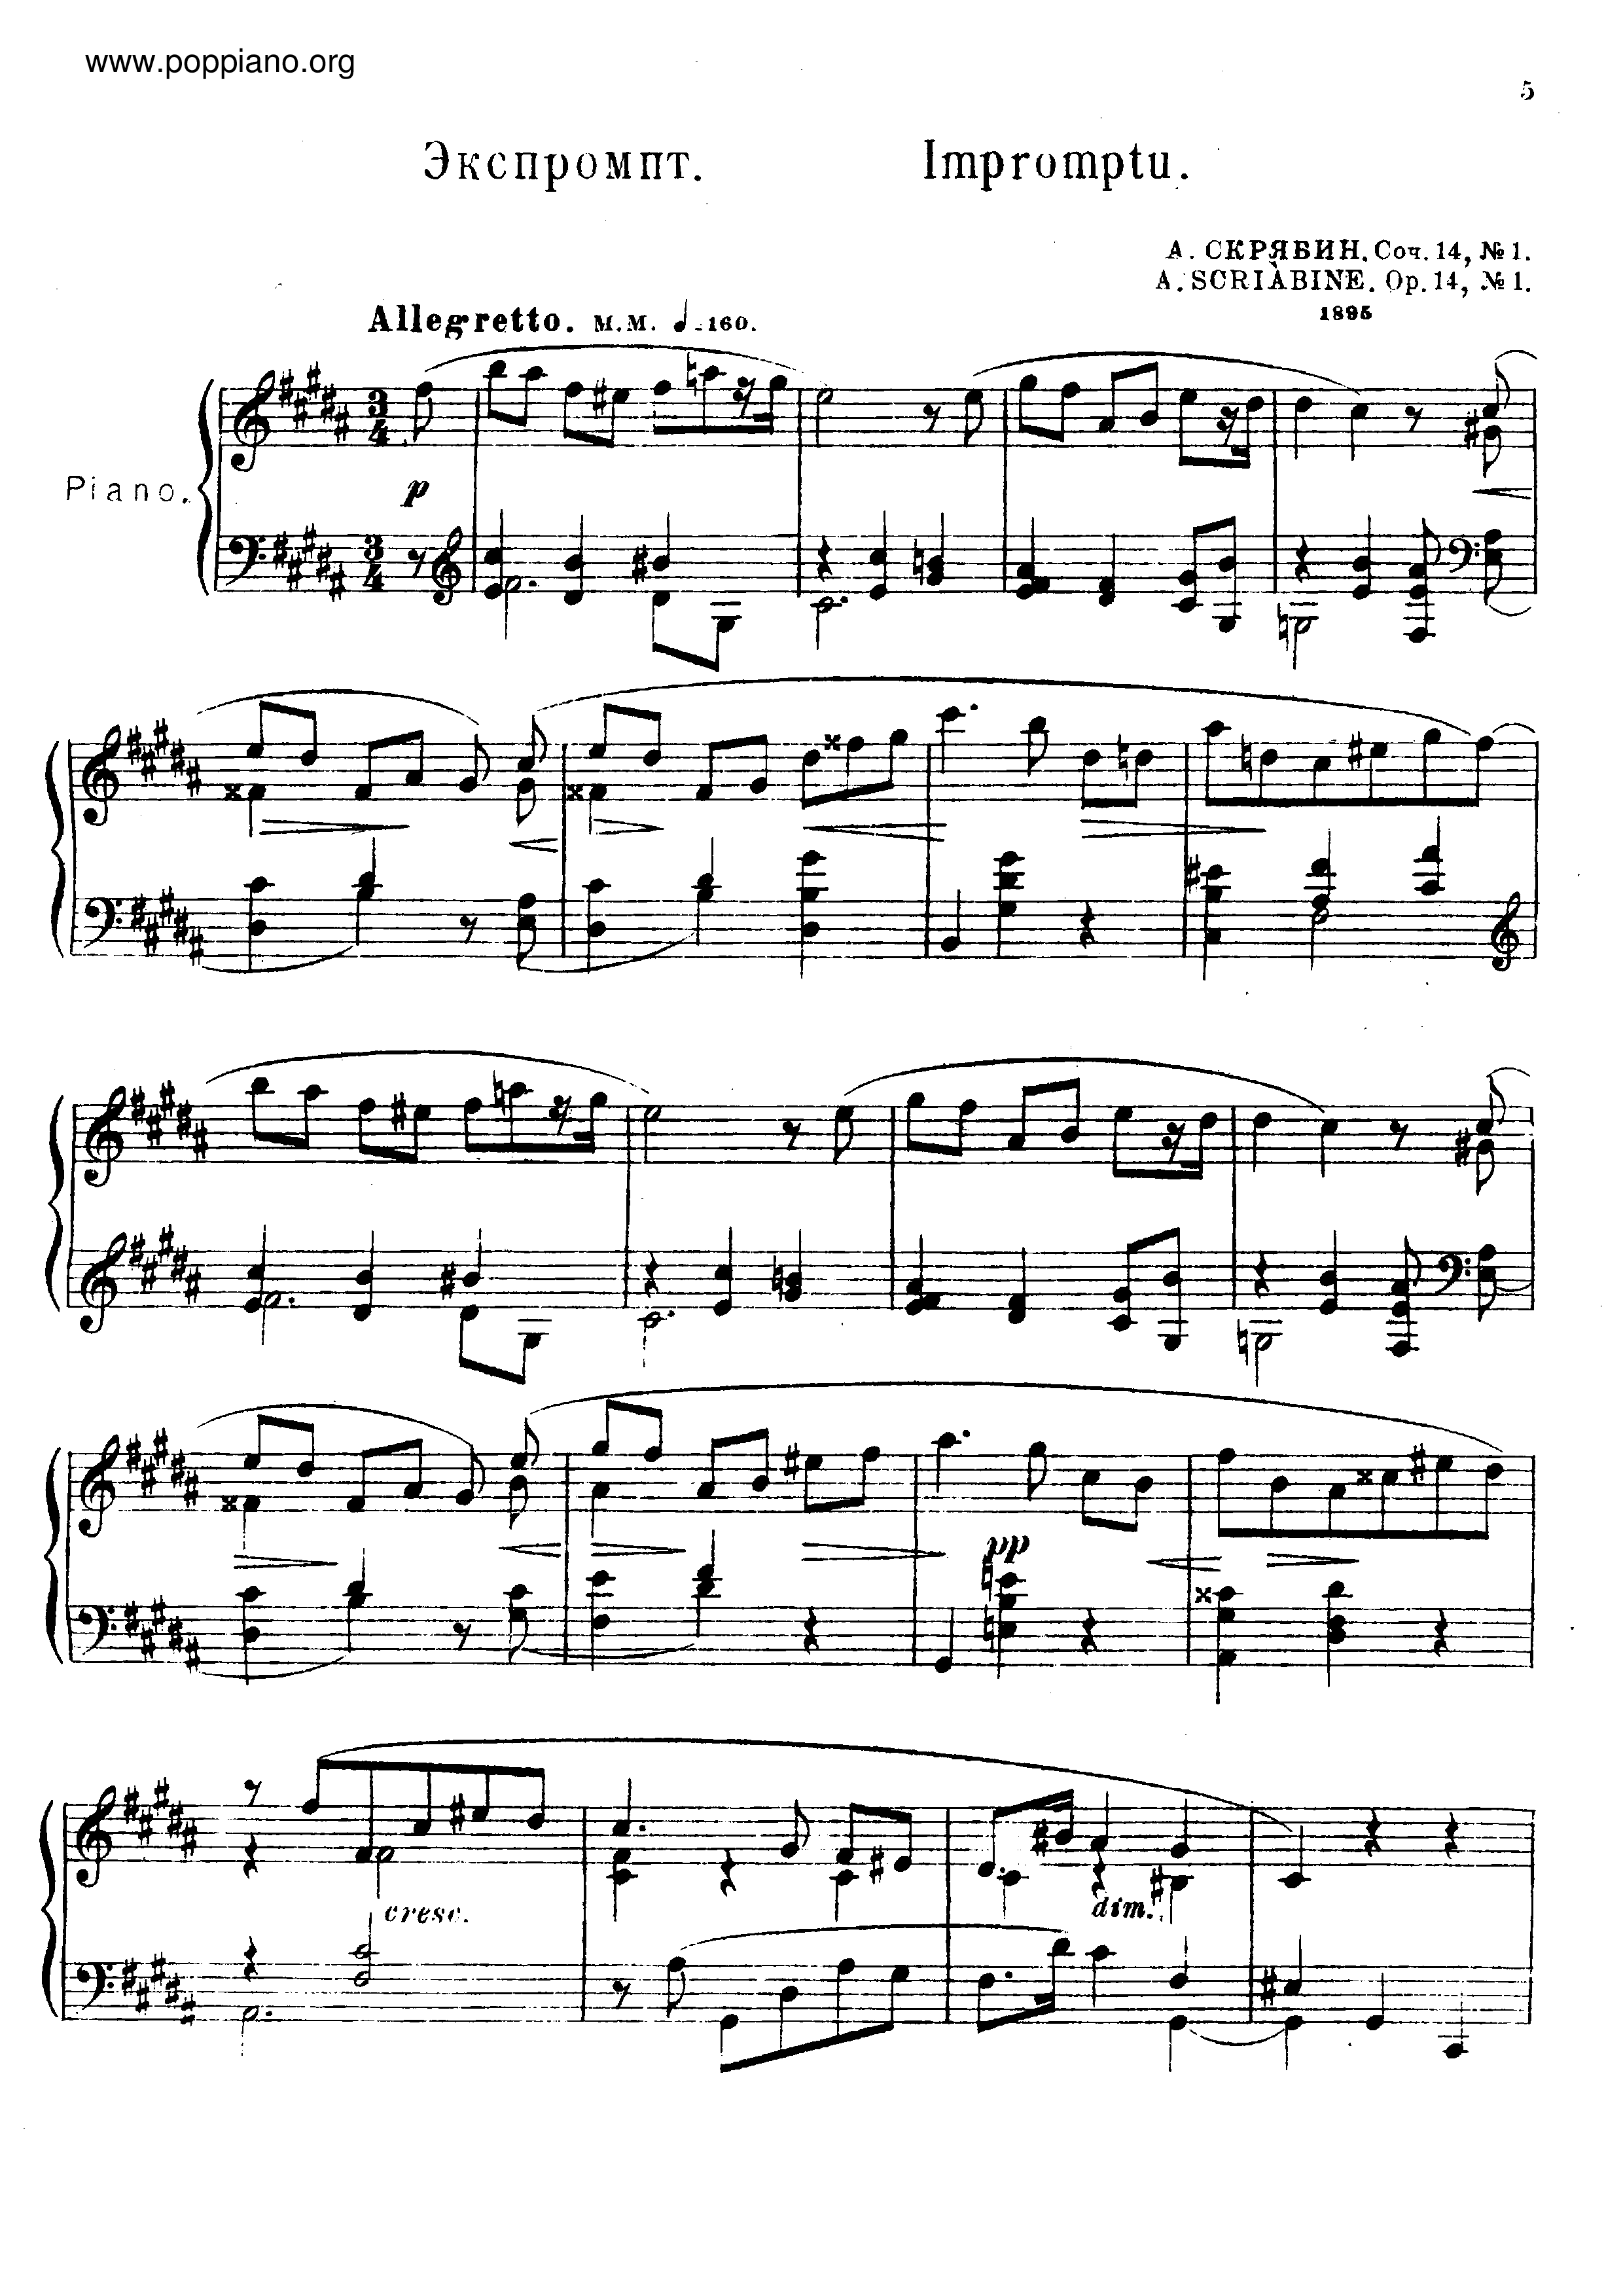 2 Impromptus, Op.14 Score